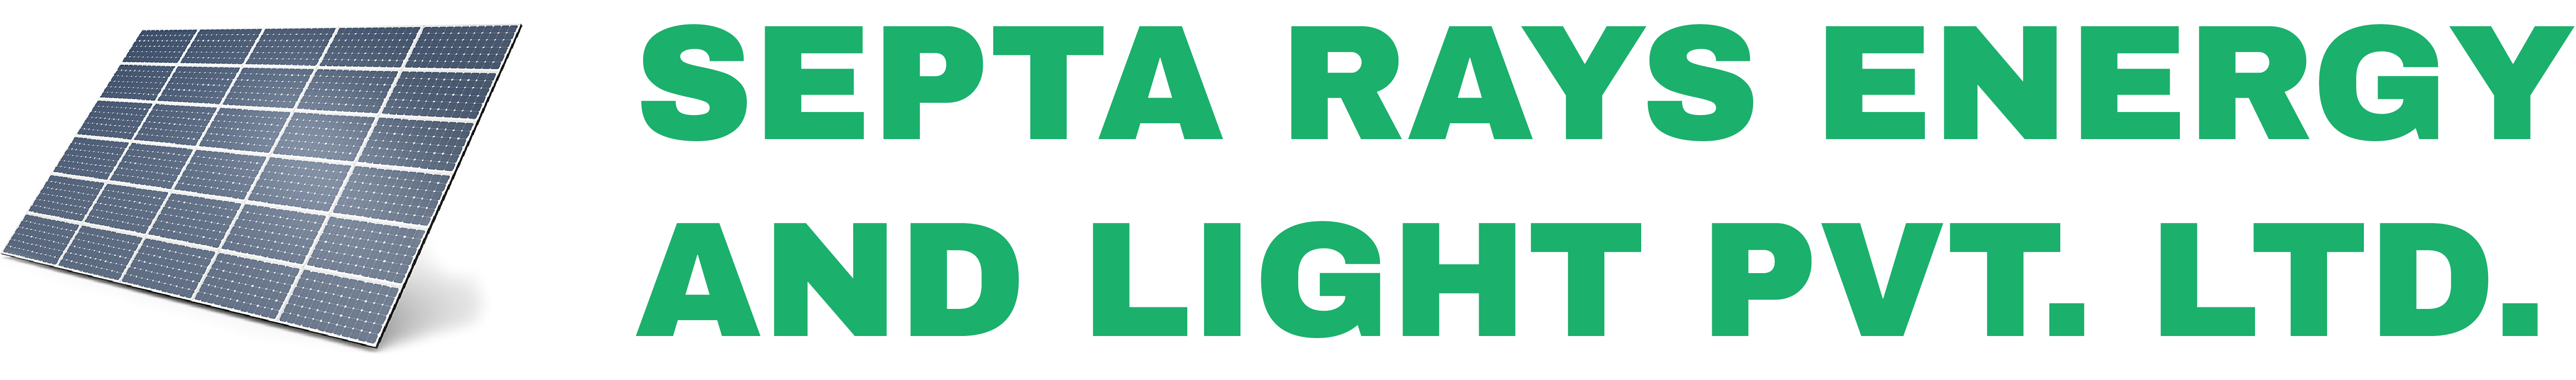 SREAL | SEPTA RAYS ENERGY AND LIGHT PVT. LTD.